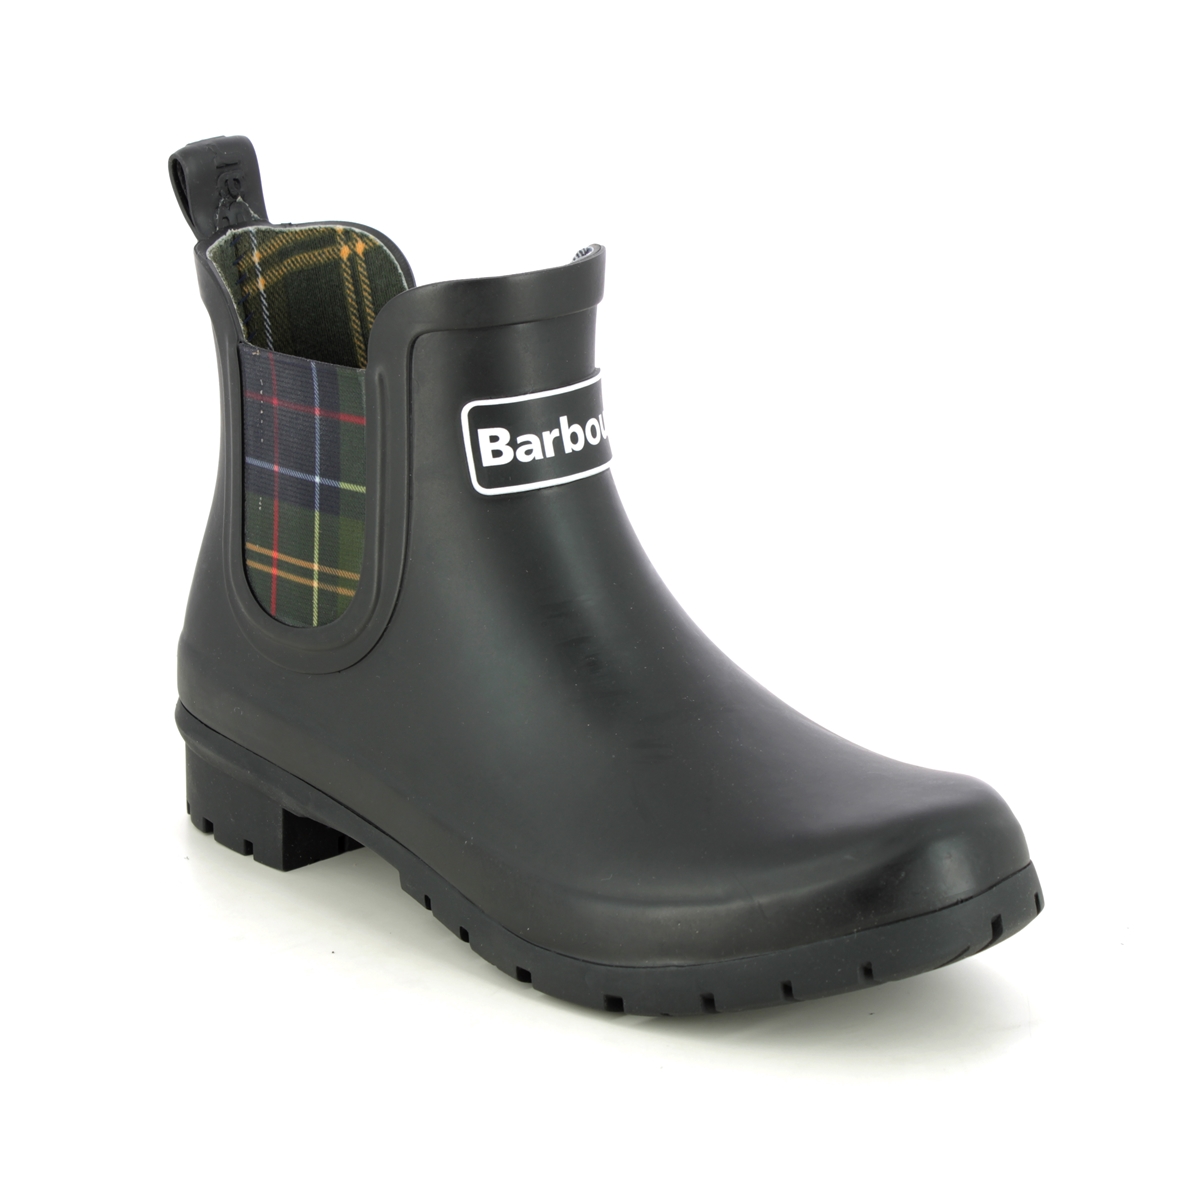 Barbour Kingham Wellie Black Boots Lrf0088-Bk11 In Size 4 In Plain Black